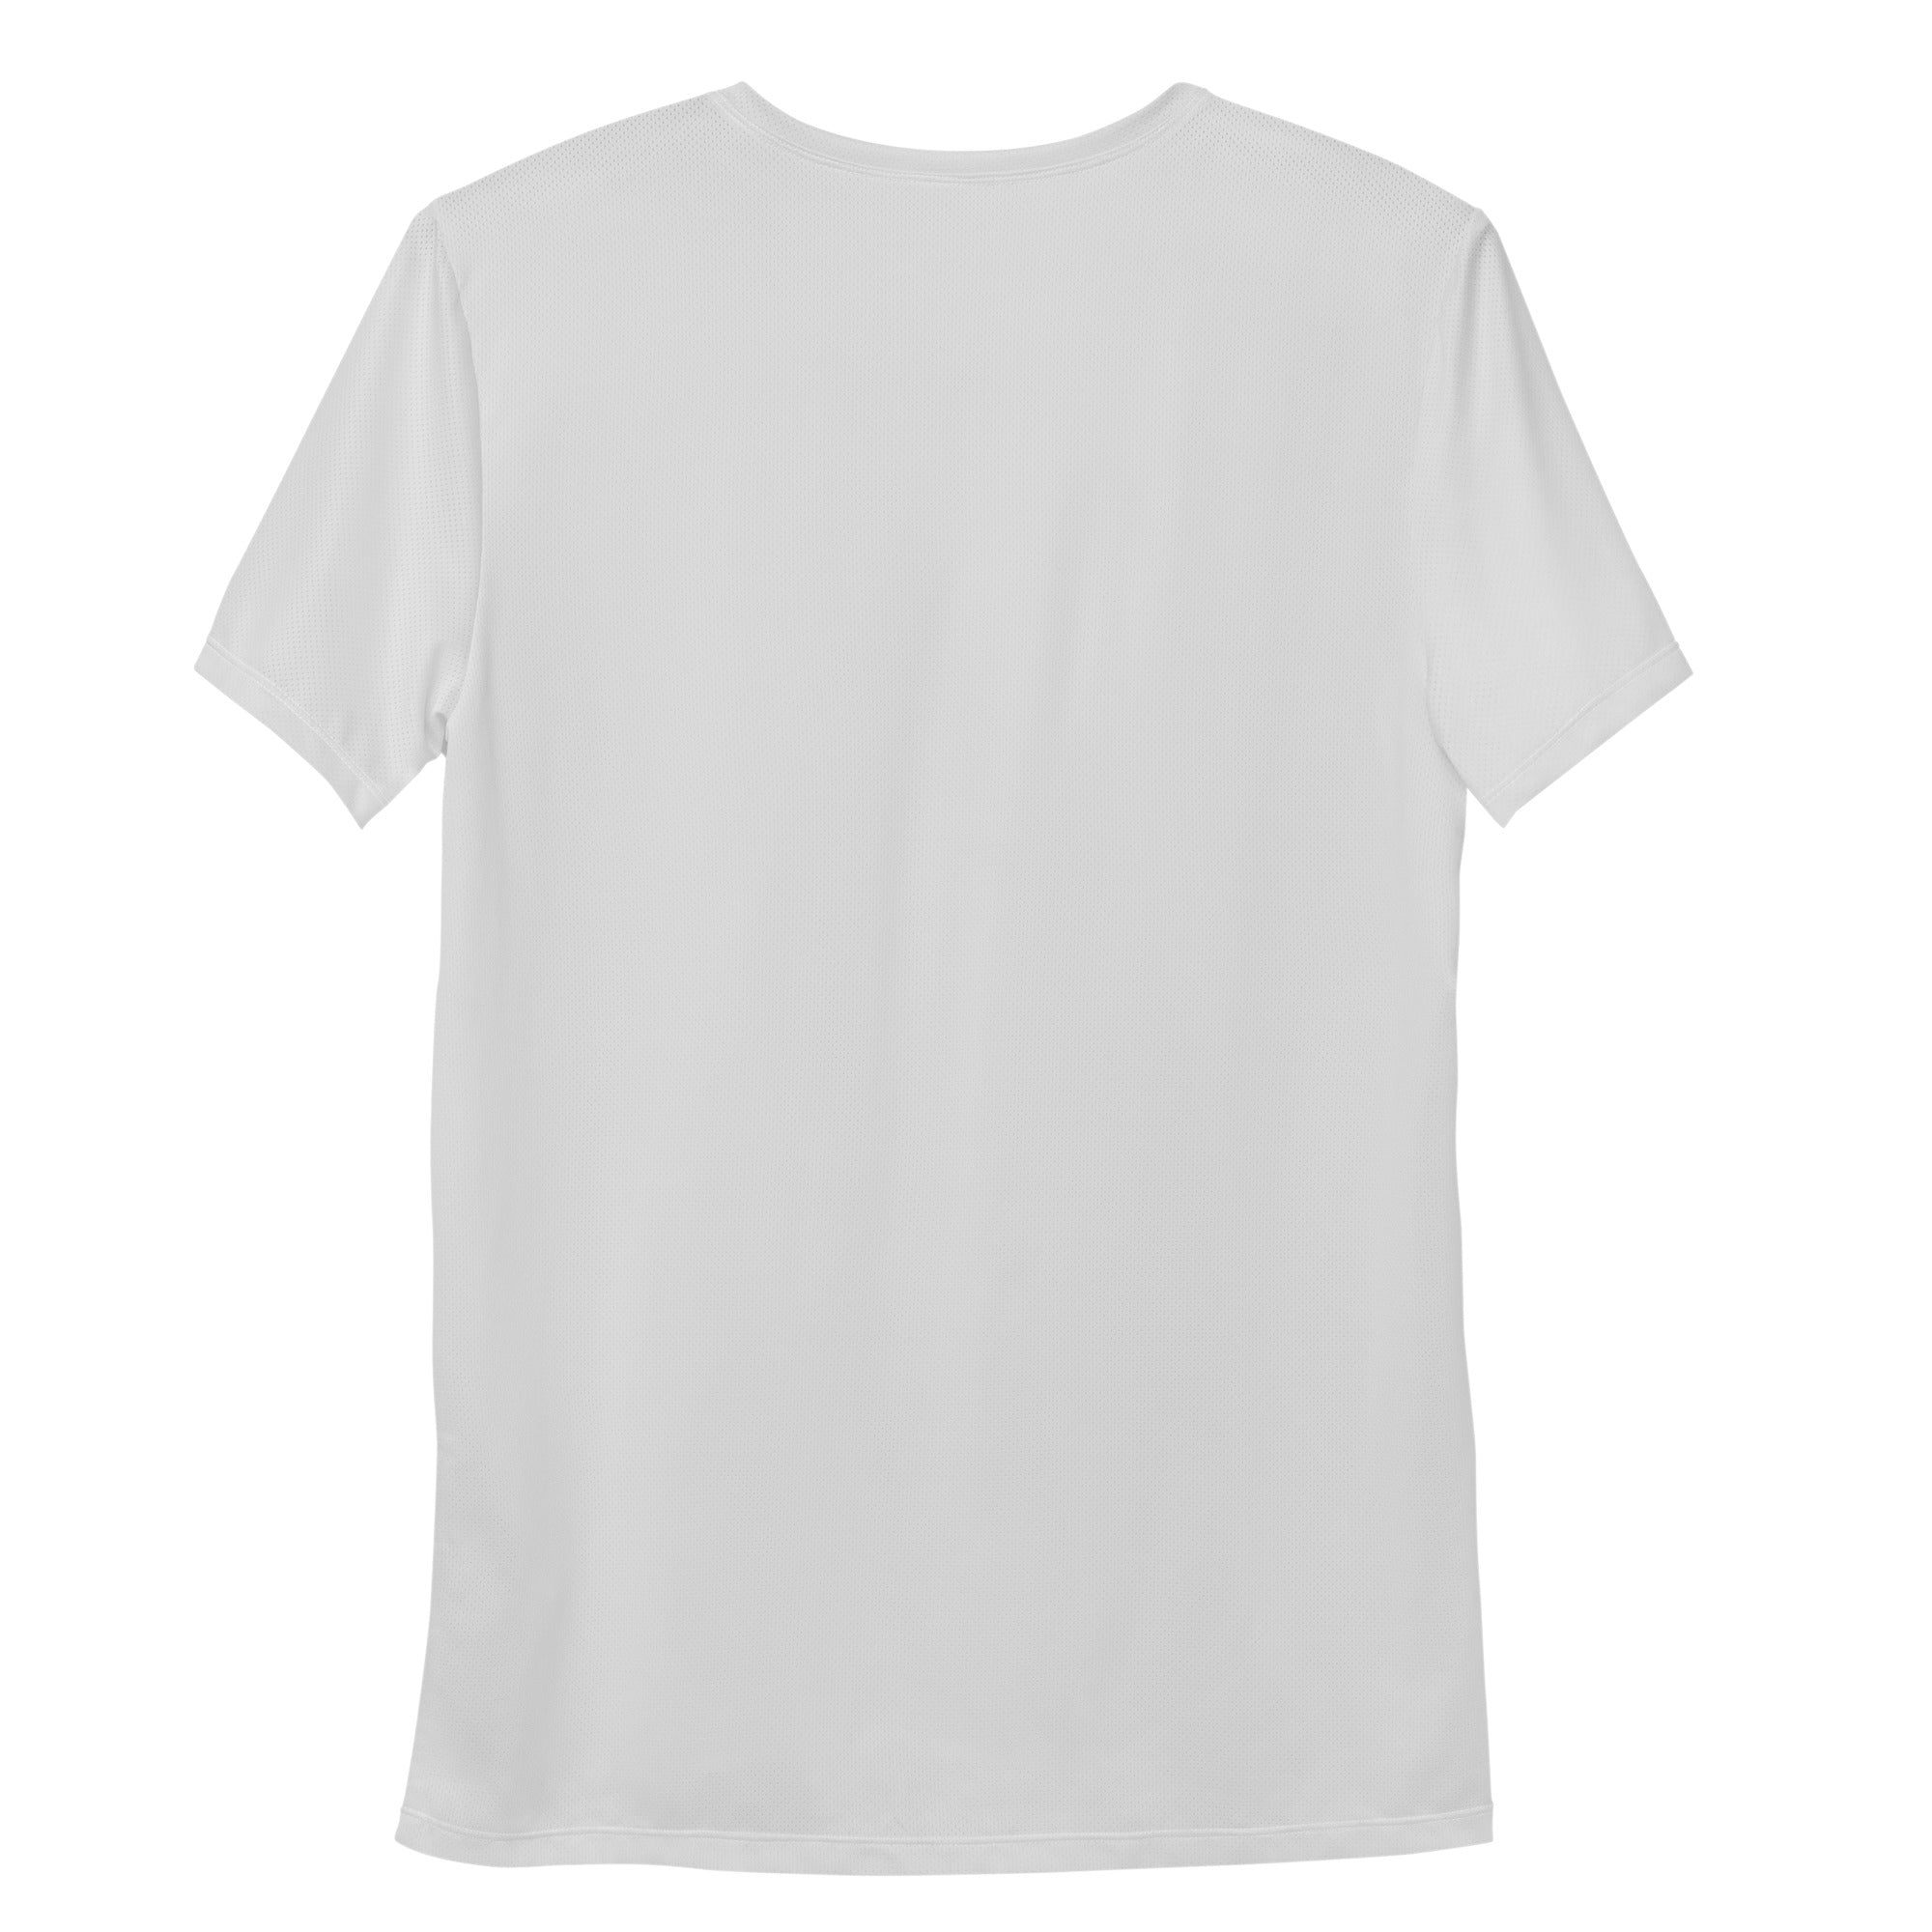 WBTF Performance Short Sleeve Men's Athletic T-shirt